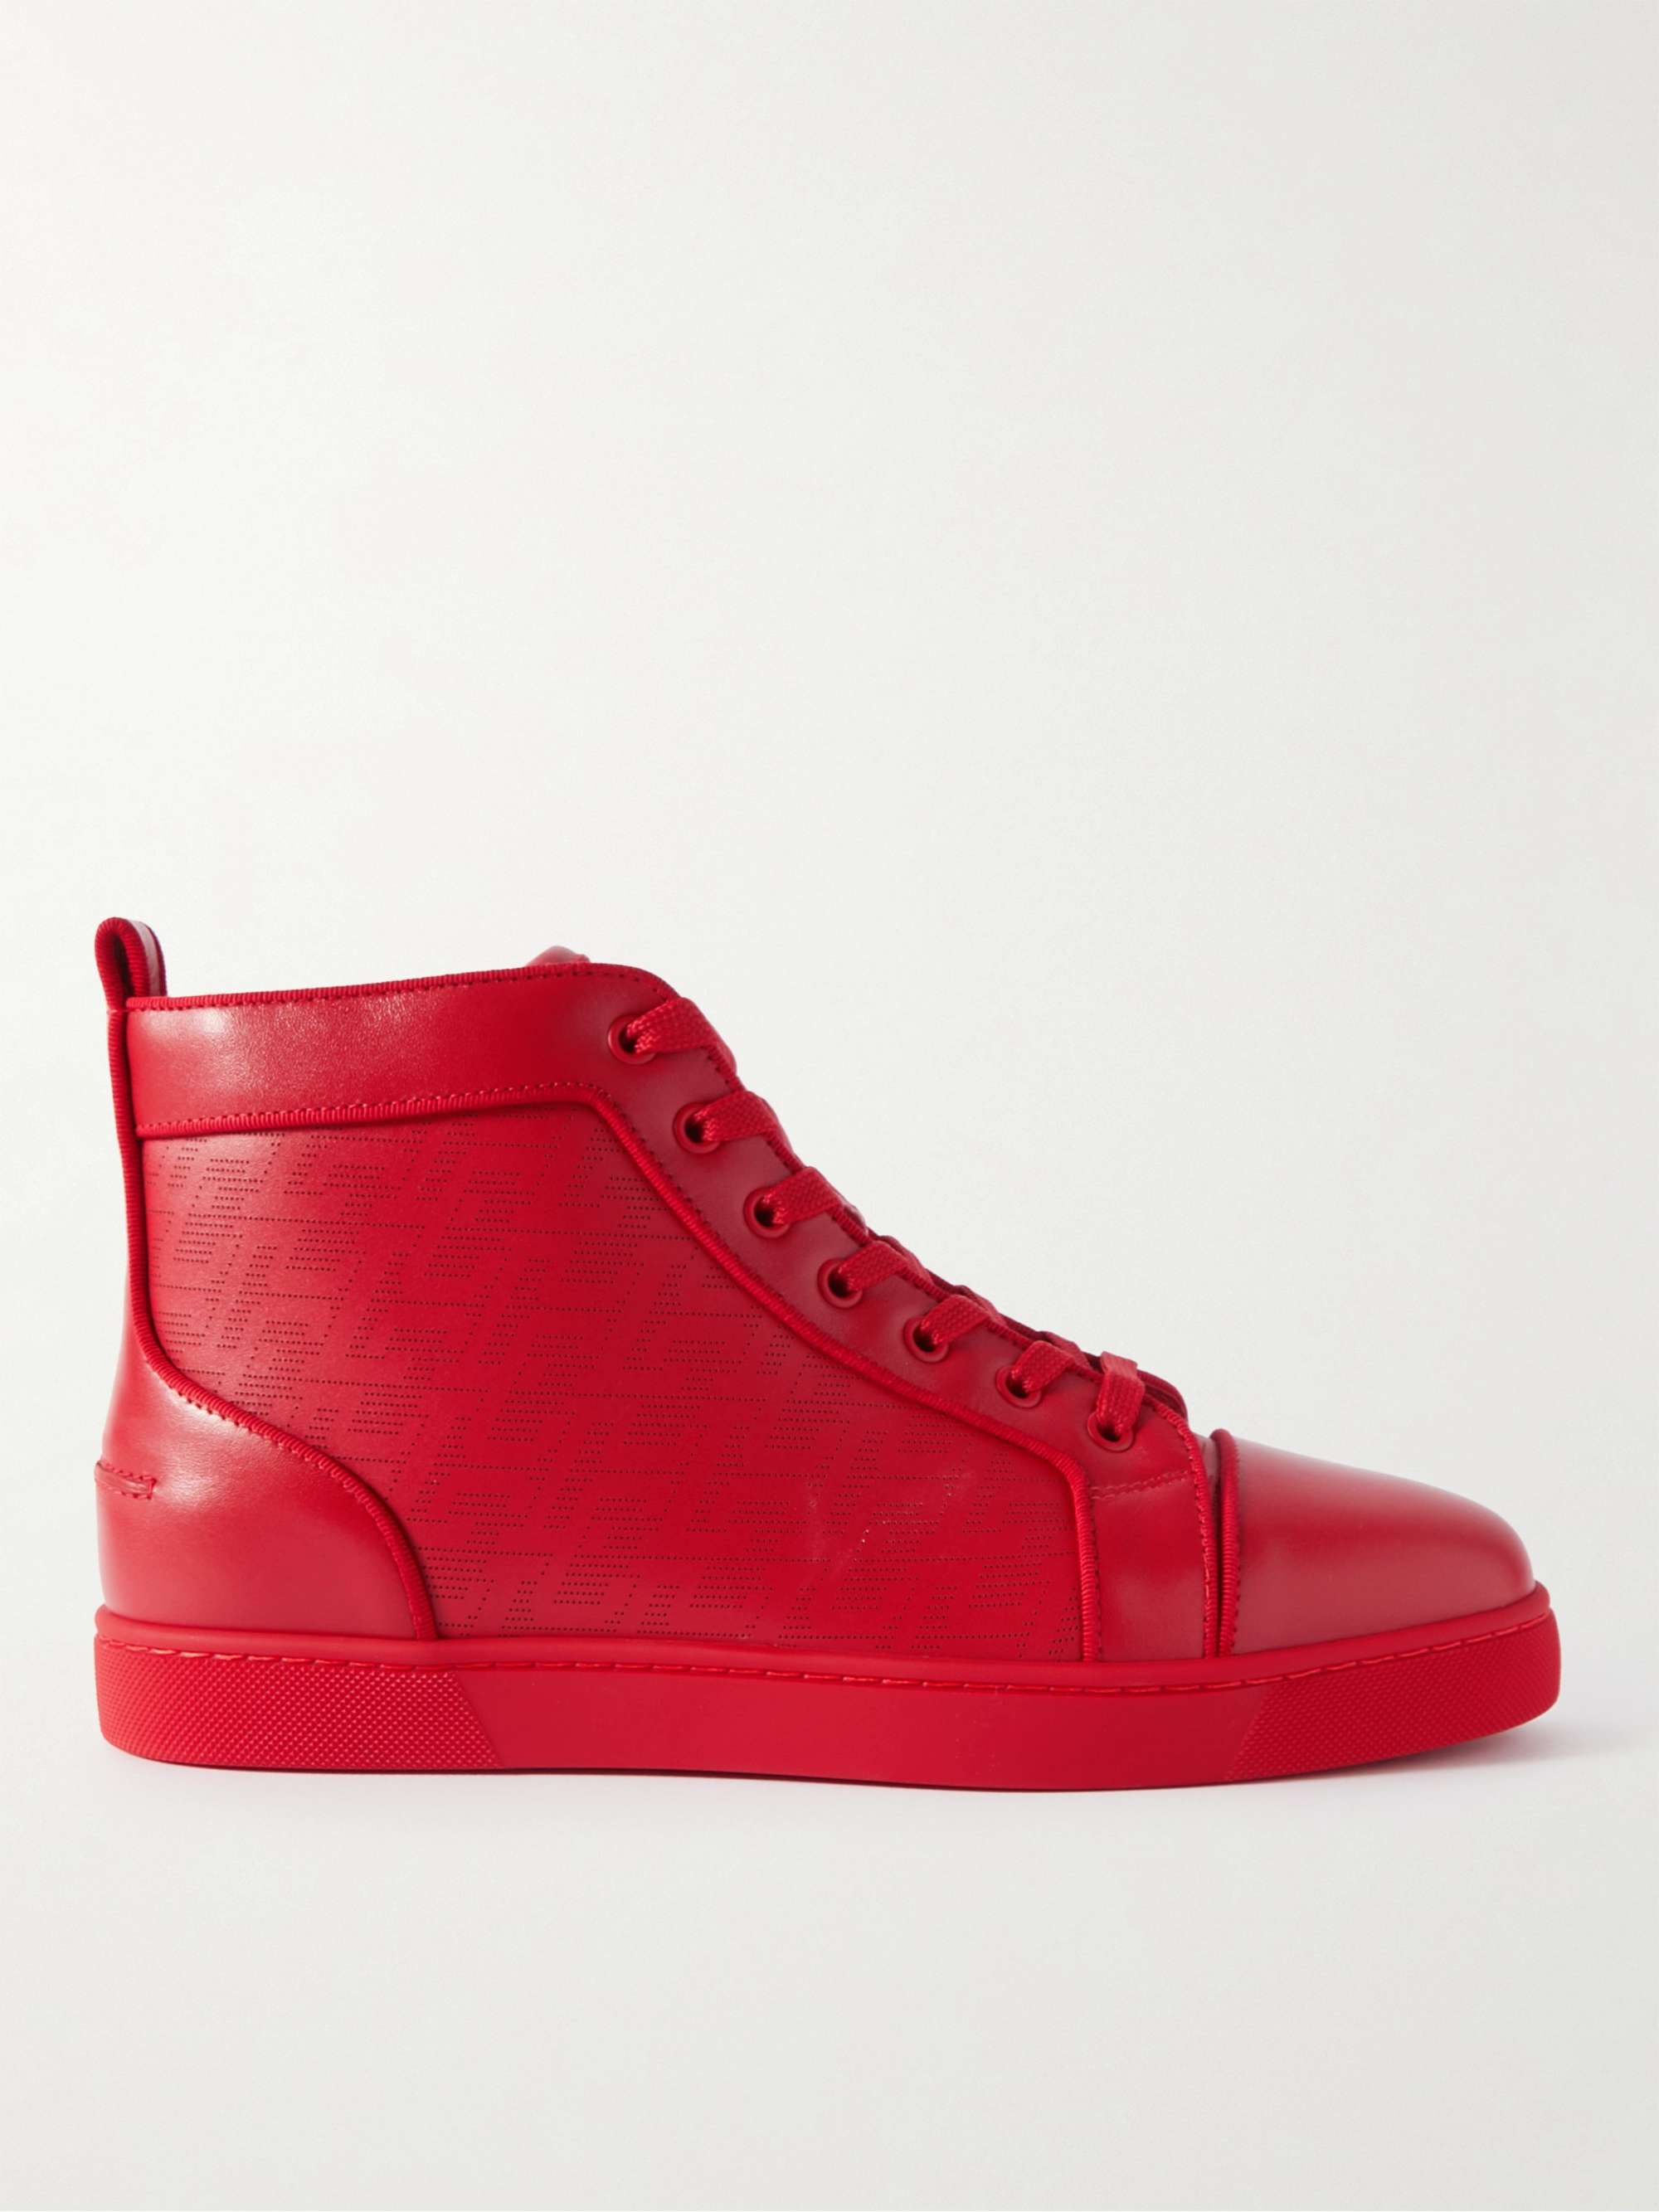 Christian Louboutin - Men - Louis Orlato Logo-Appliquéd Leather High-Top Sneakers Red - EU 42.5